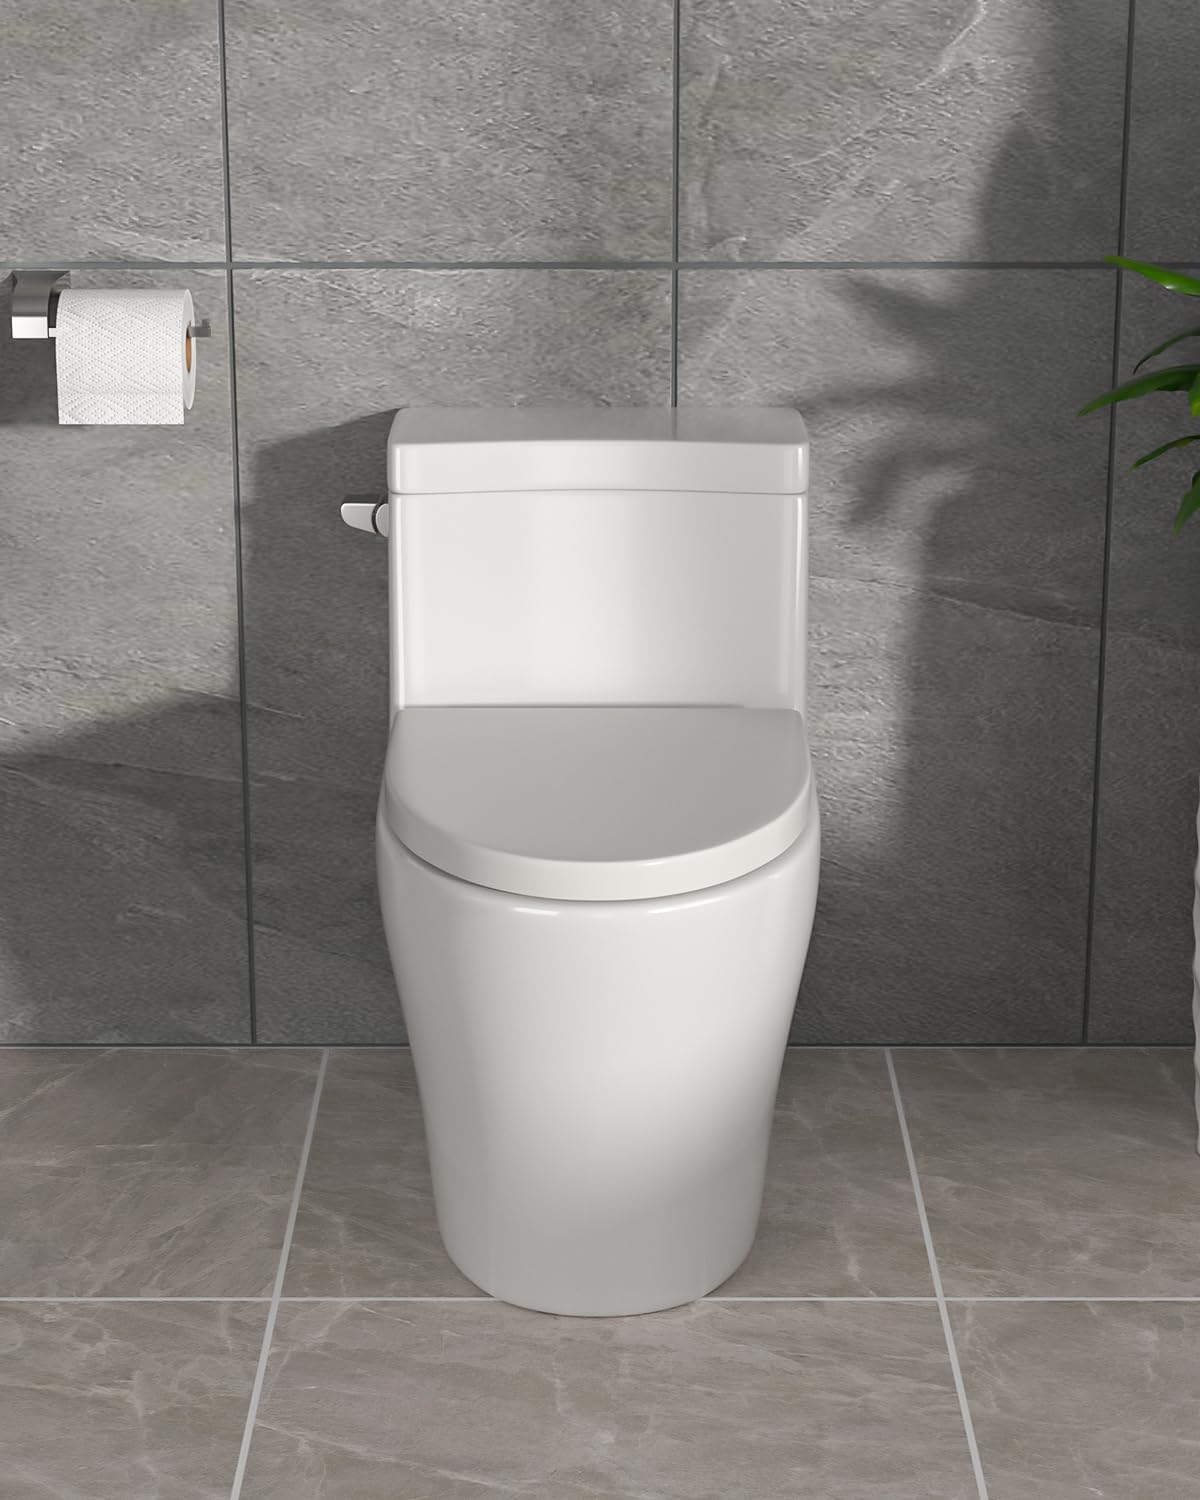 Dcolora One Piece Toilet Cyclone Single Flush 1.28 GPF Bathroom Modern Comfort Height White Ceramic Compact Toilet